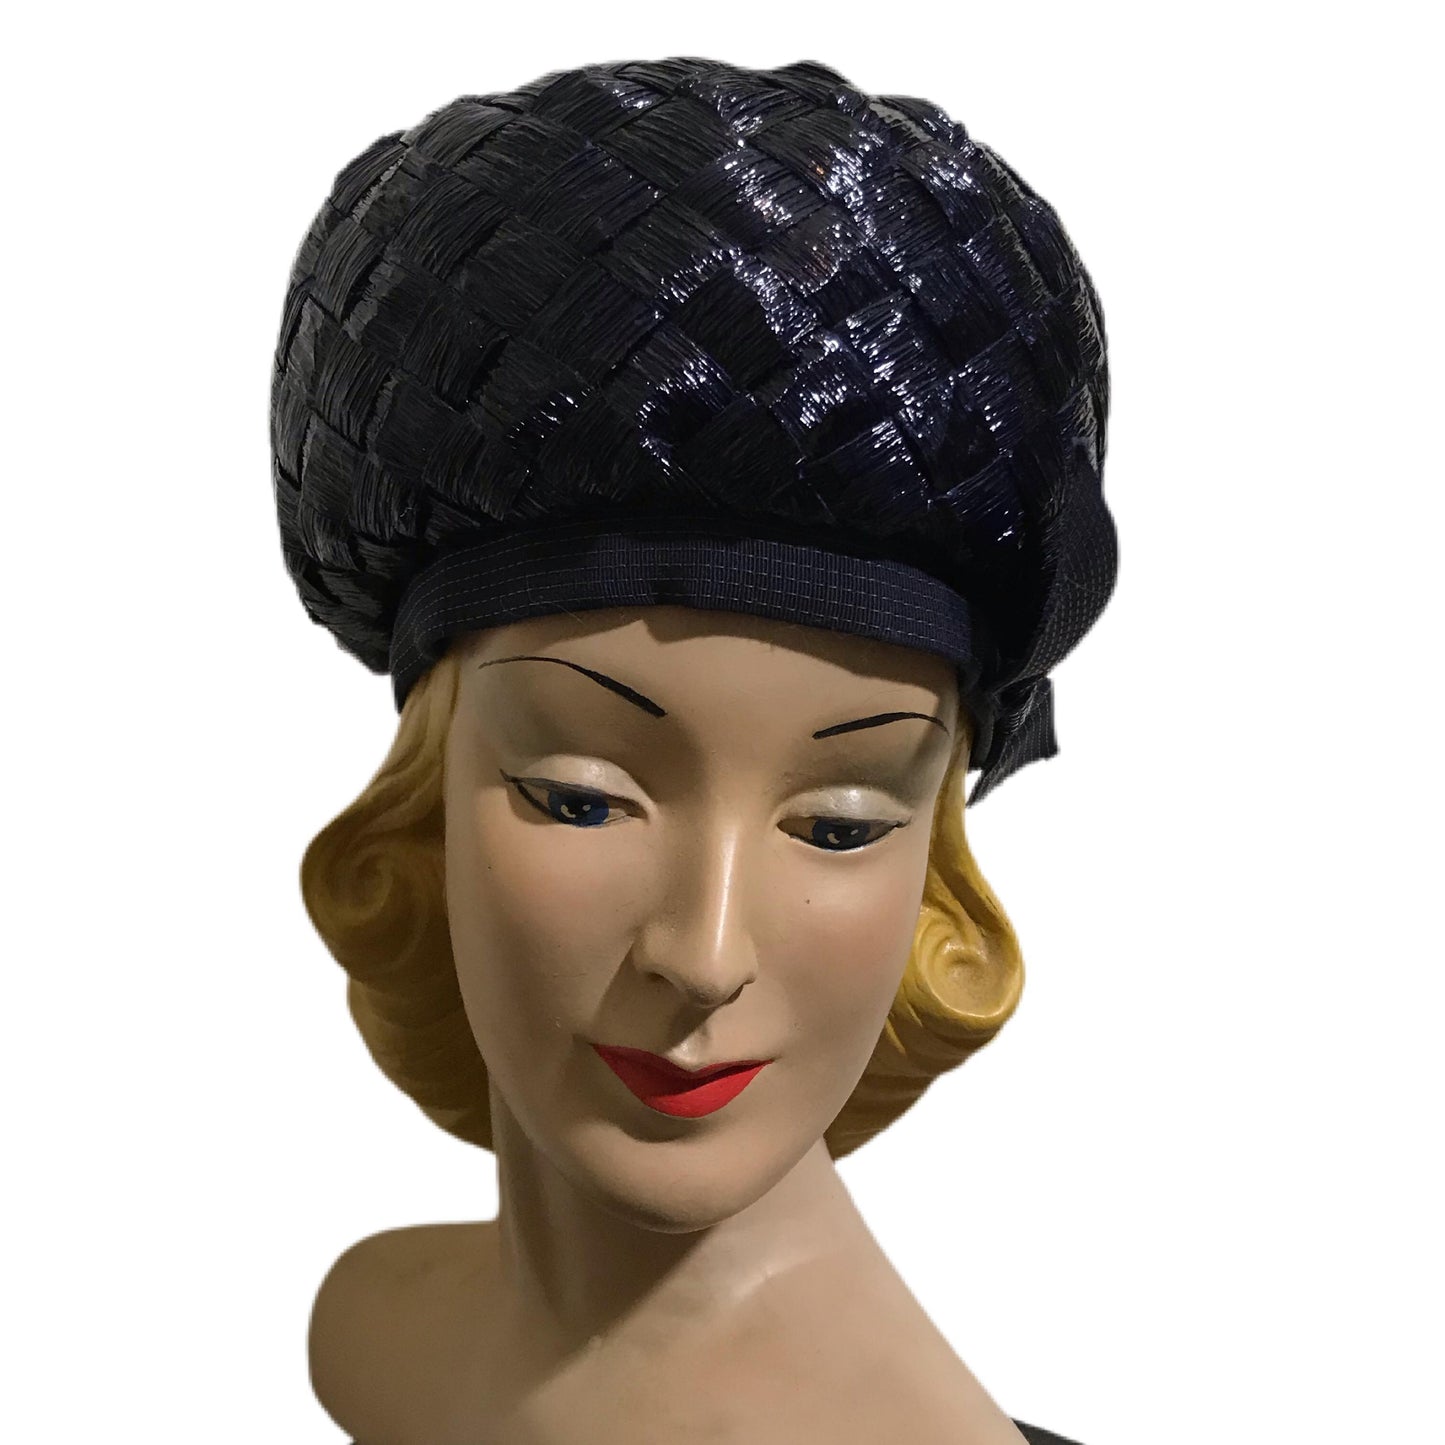 Deep Blue Mod Glossy Sisal Tall Pillbox Hat with Bow Hat circa 1960s